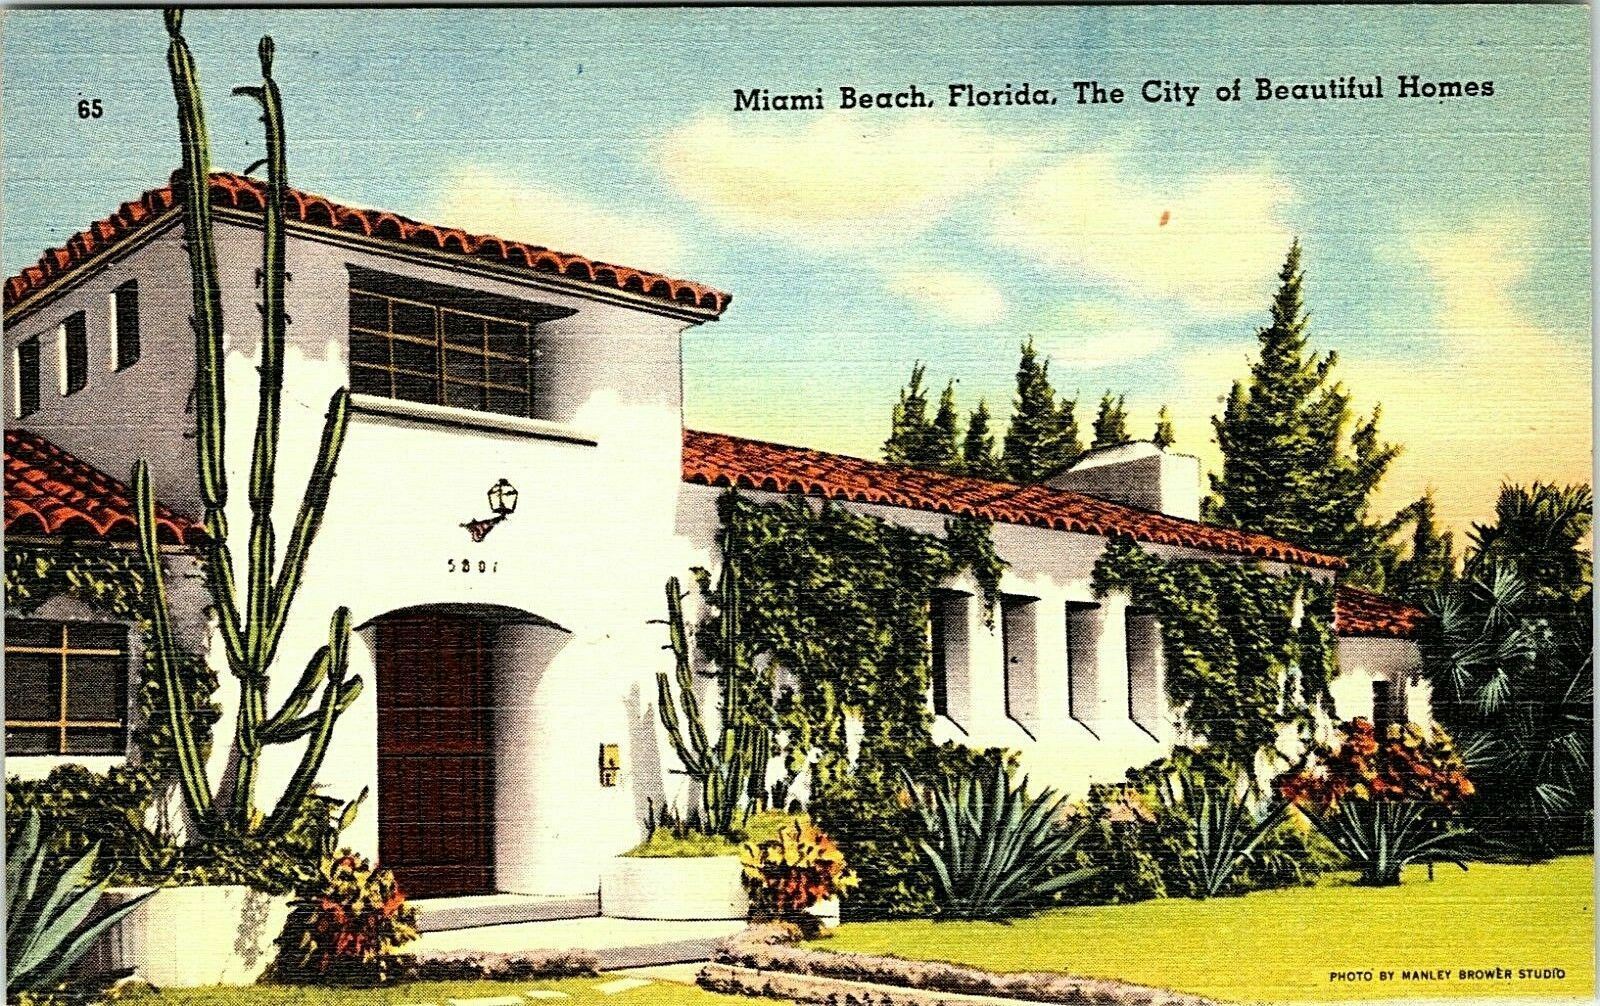 Miami Beach Florida The City of Beautiful Homes